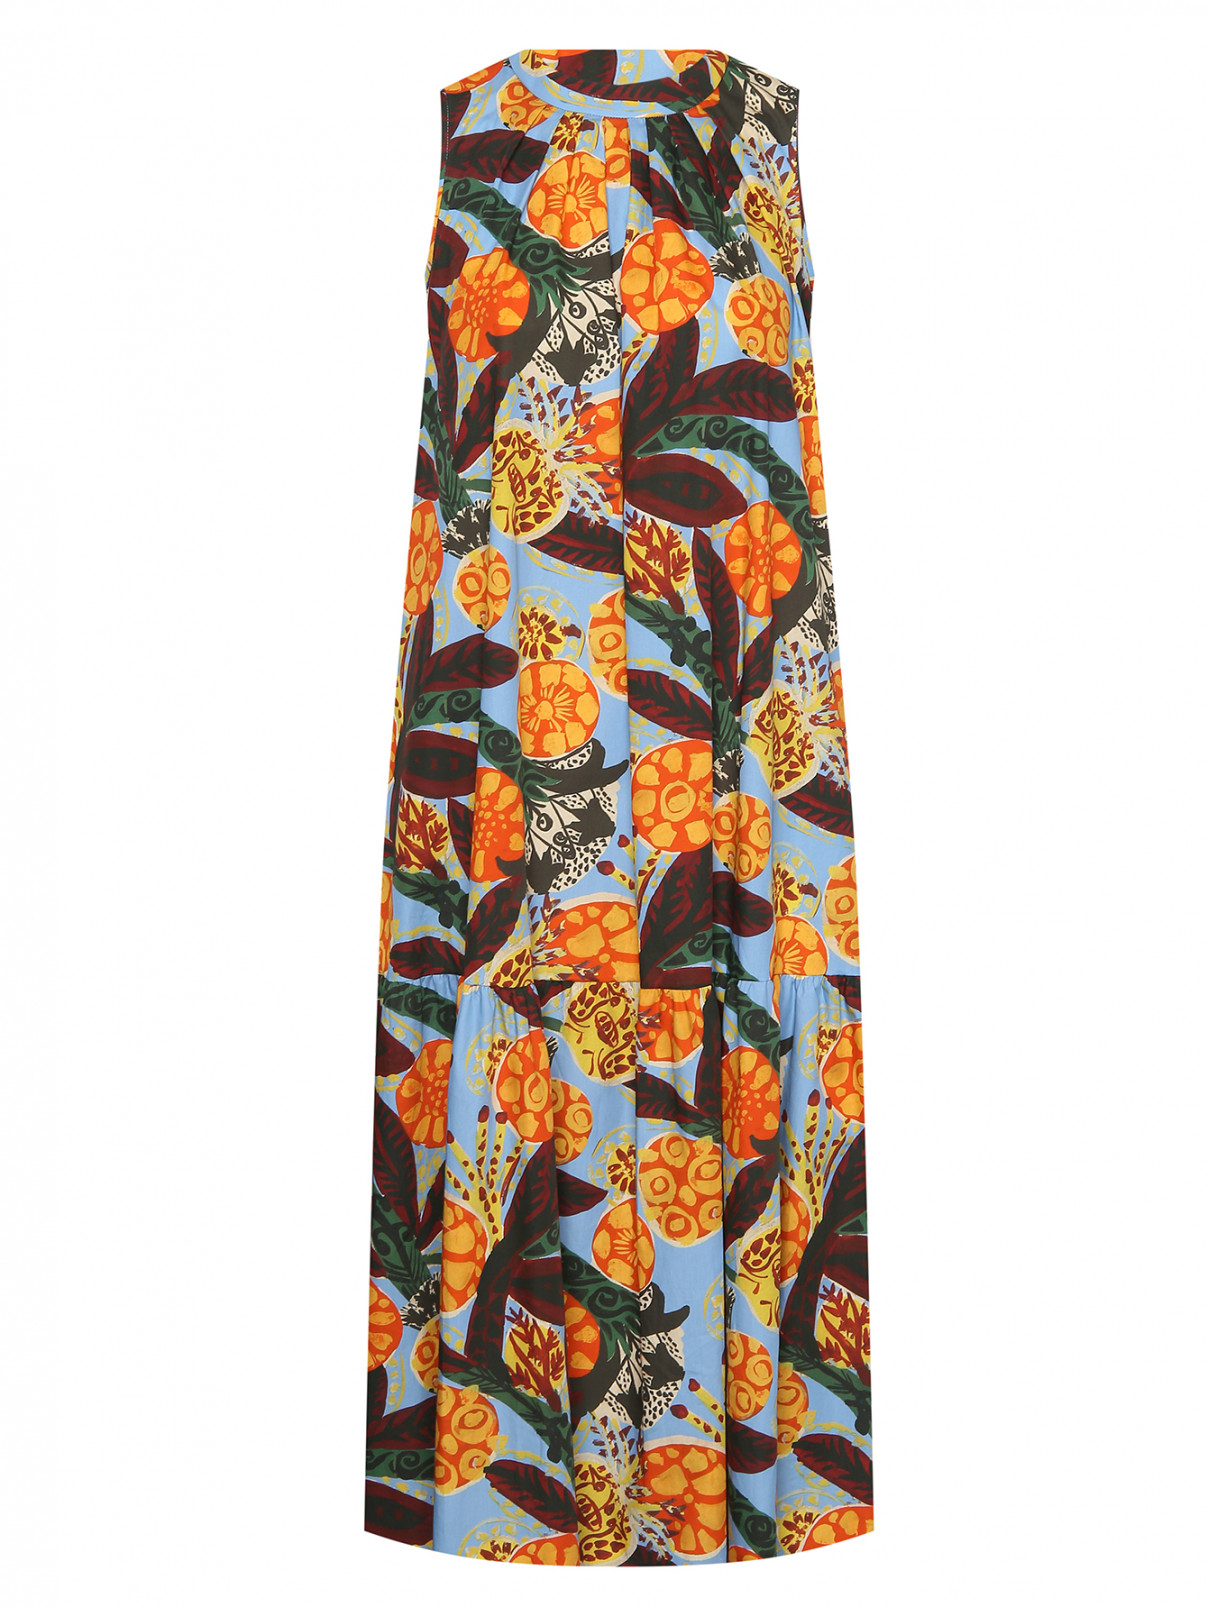 Платье-миди из хлопка с узором Weekend Max Mara  –  Общий вид  – Цвет:  Узор